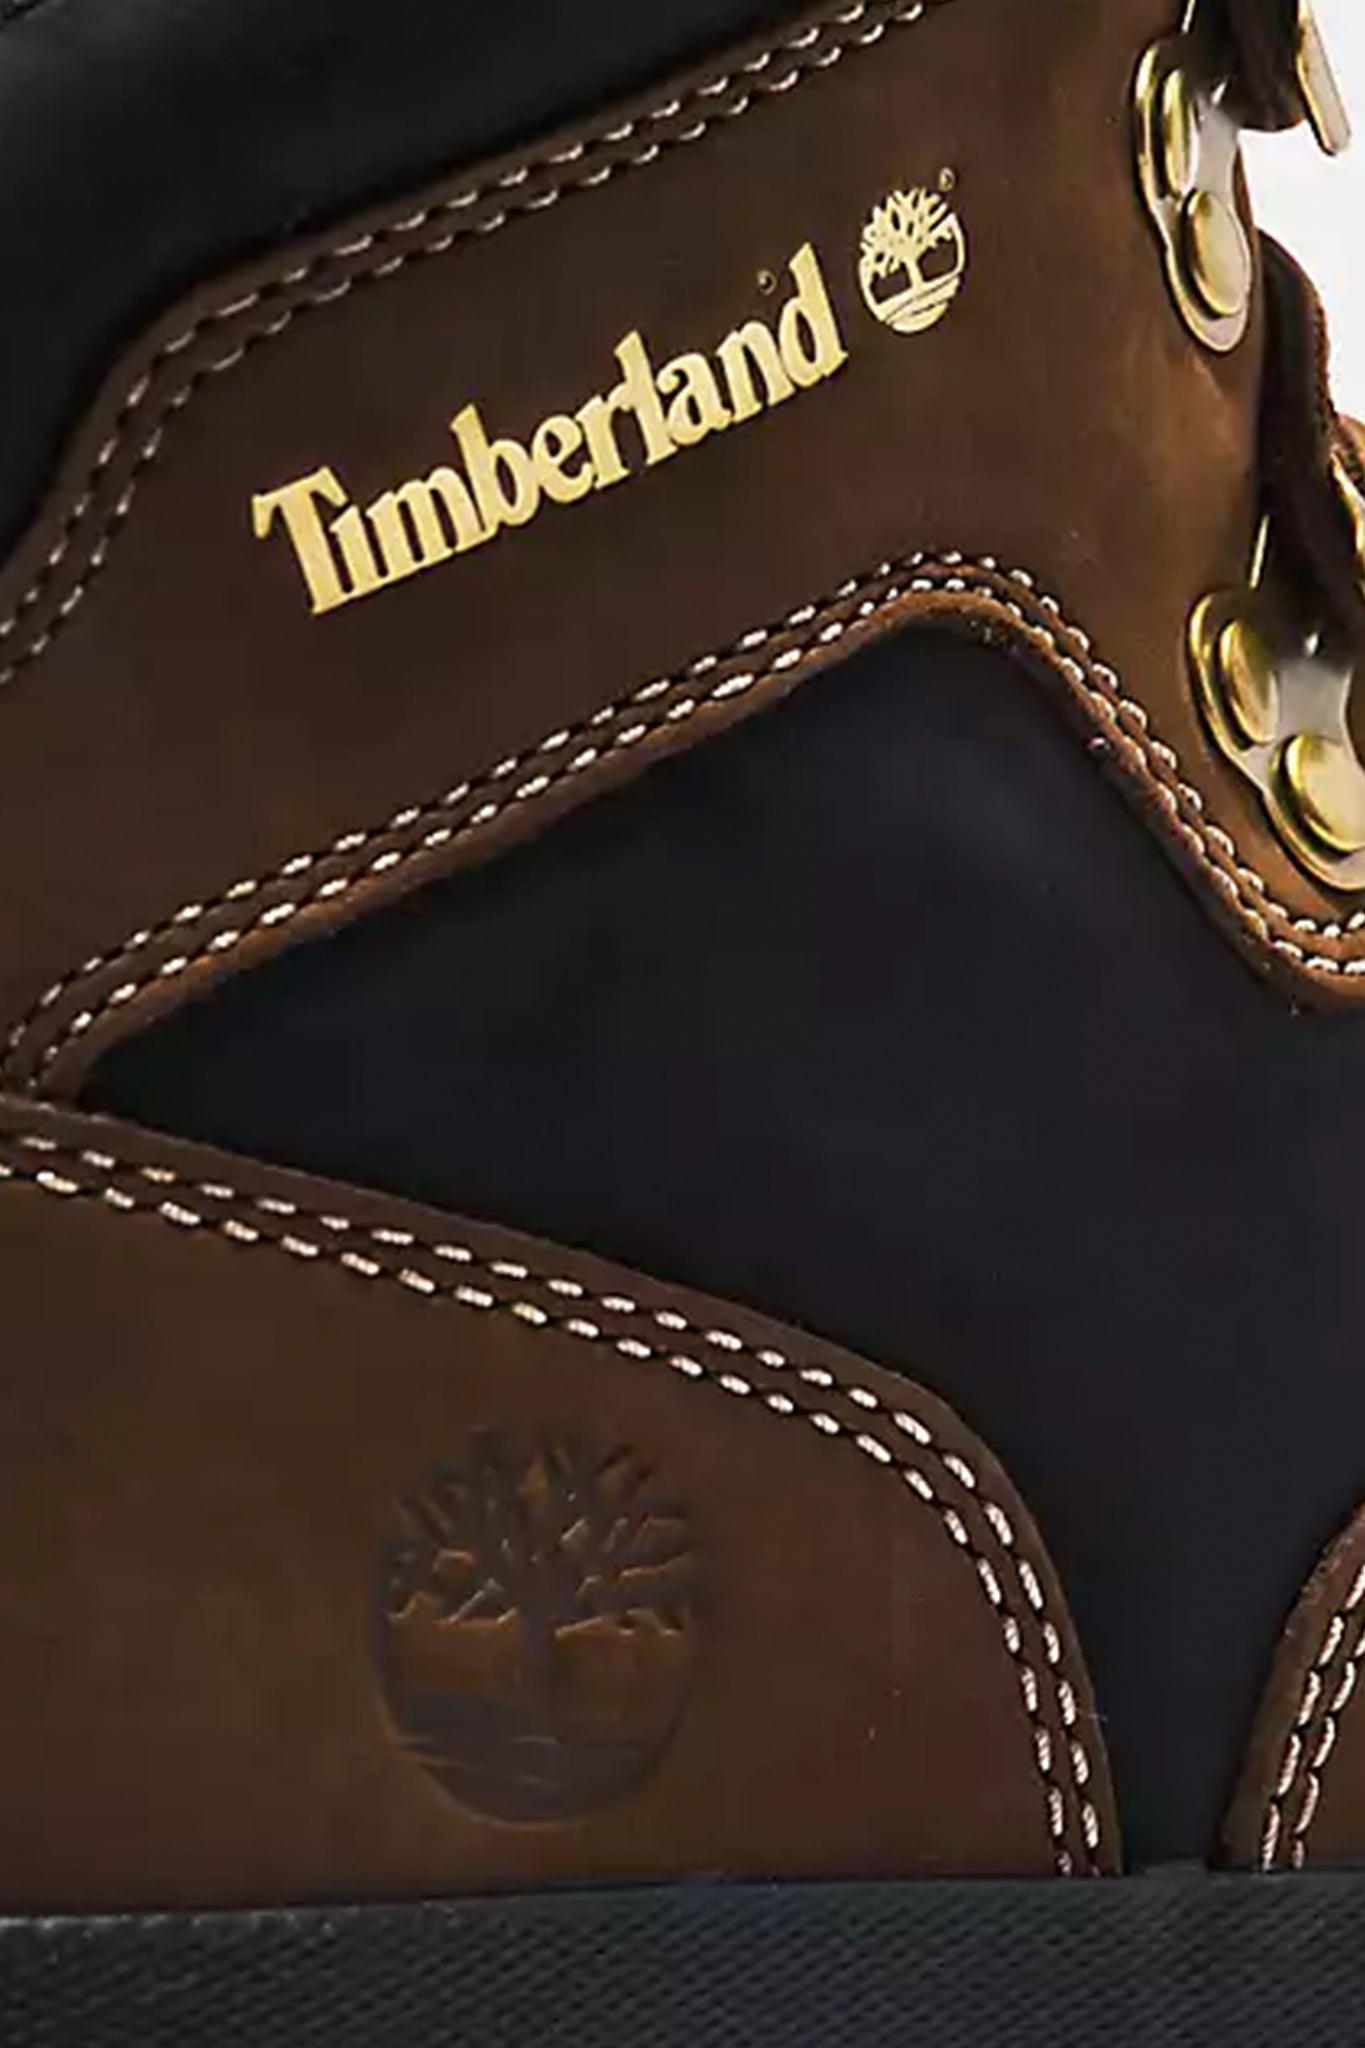 Timberland Men's Euro Hiker Leather Boot in Dark Brown Nubuck